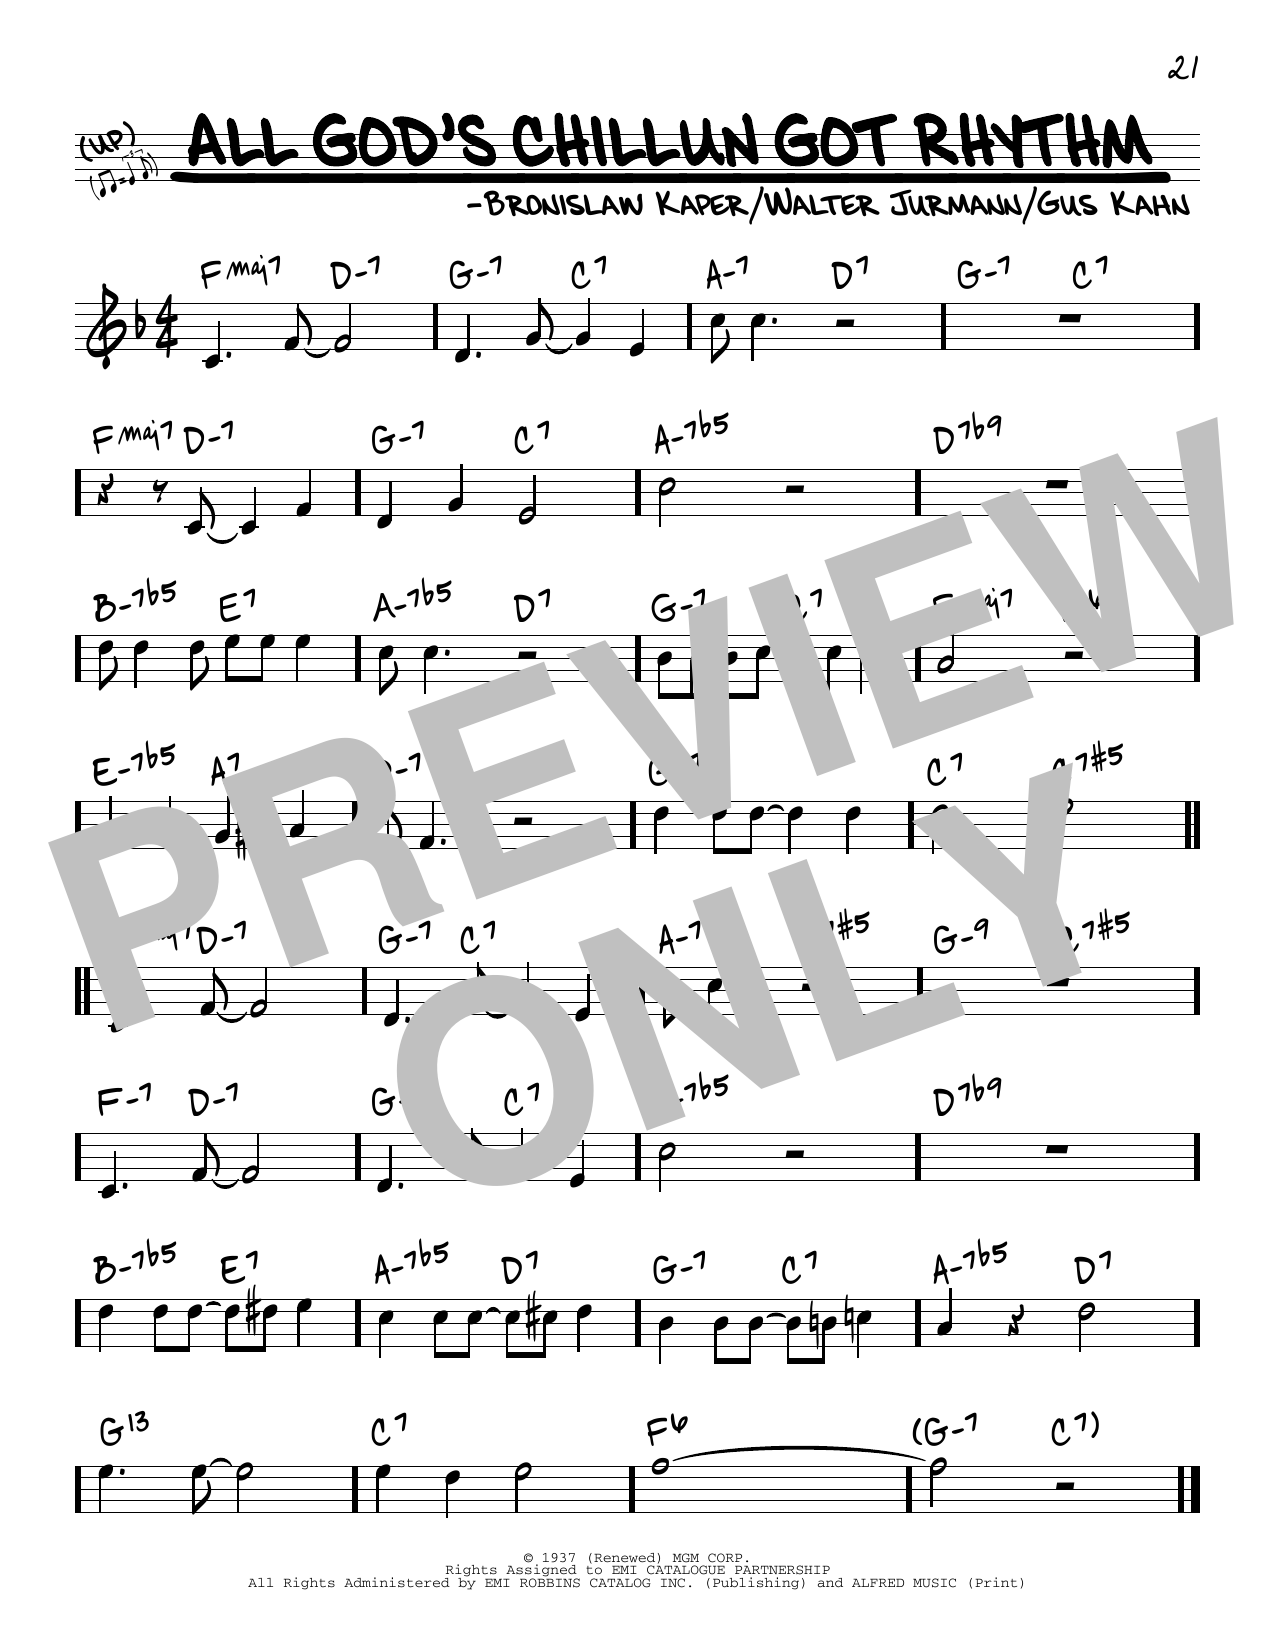 Bronislaw Kaper, Walter Jurmann and Gus Kahn All God's Chillun Got Rhythm sheet music notes and chords arranged for Real Book – Melody & Chords